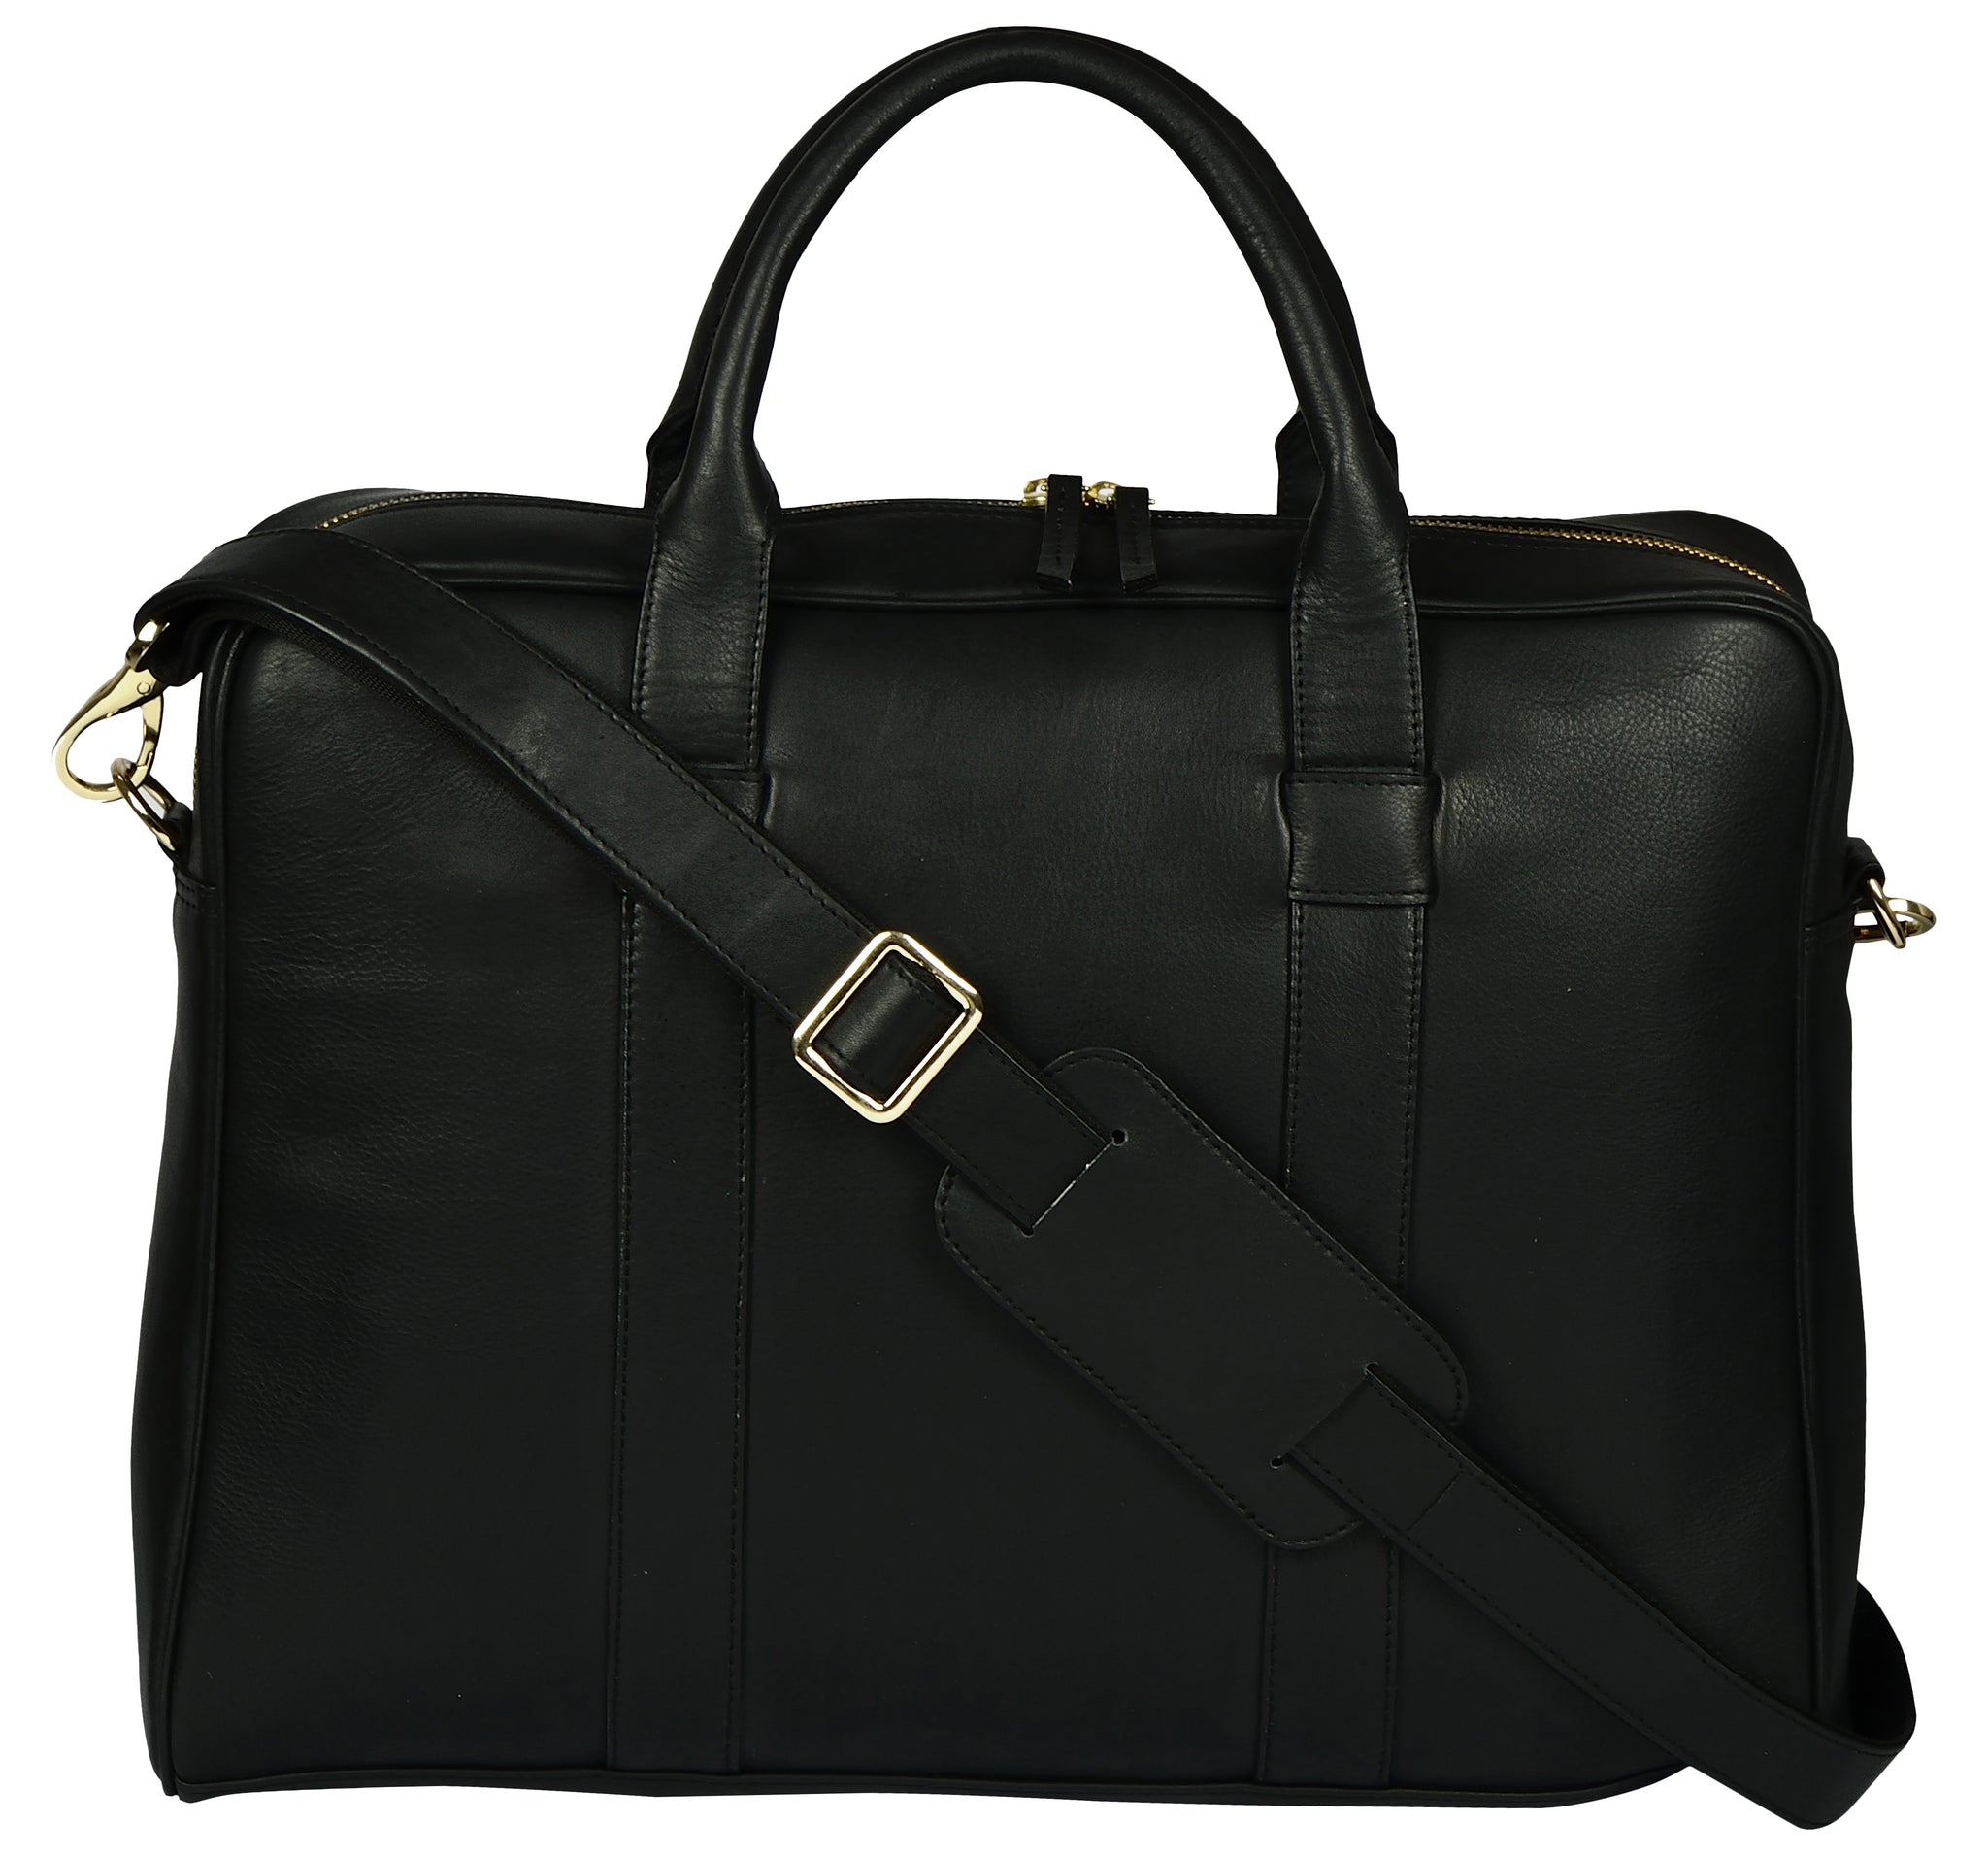 Women's black satchel leather bag